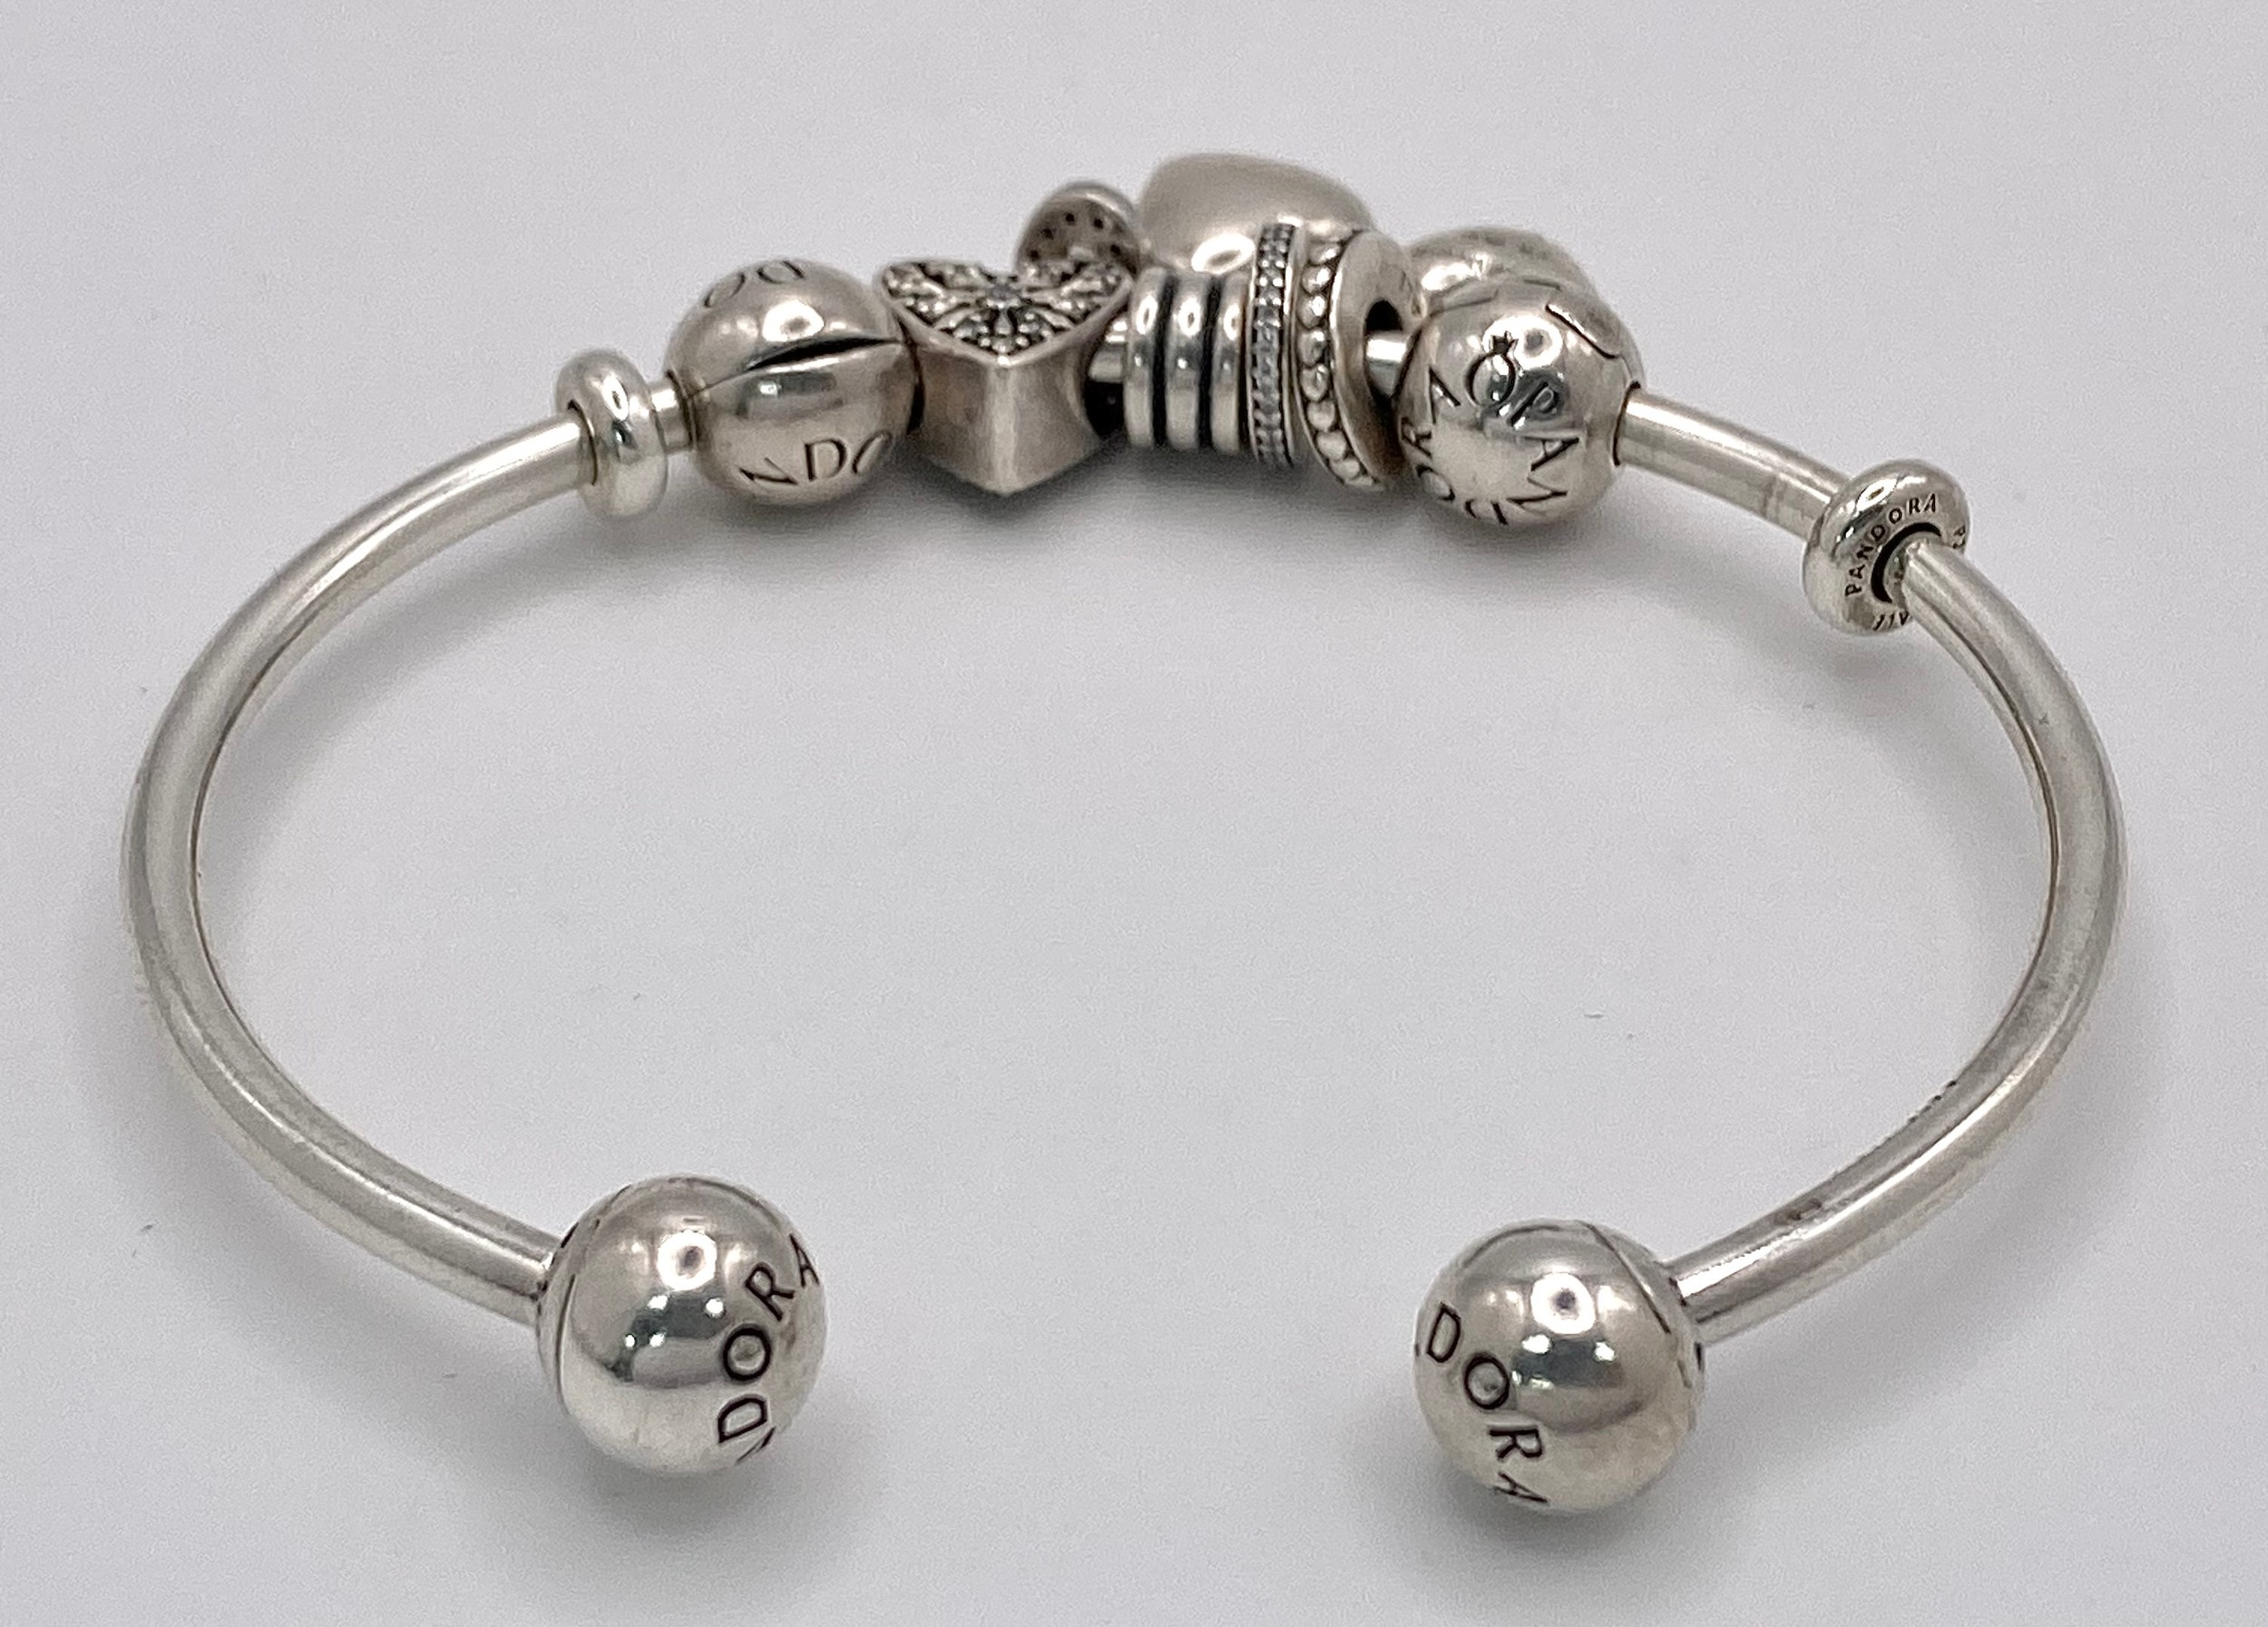 A Pandora 925 Silver Charm Cuff Bangle. Comes with a Pandora presentation case. - Image 2 of 4